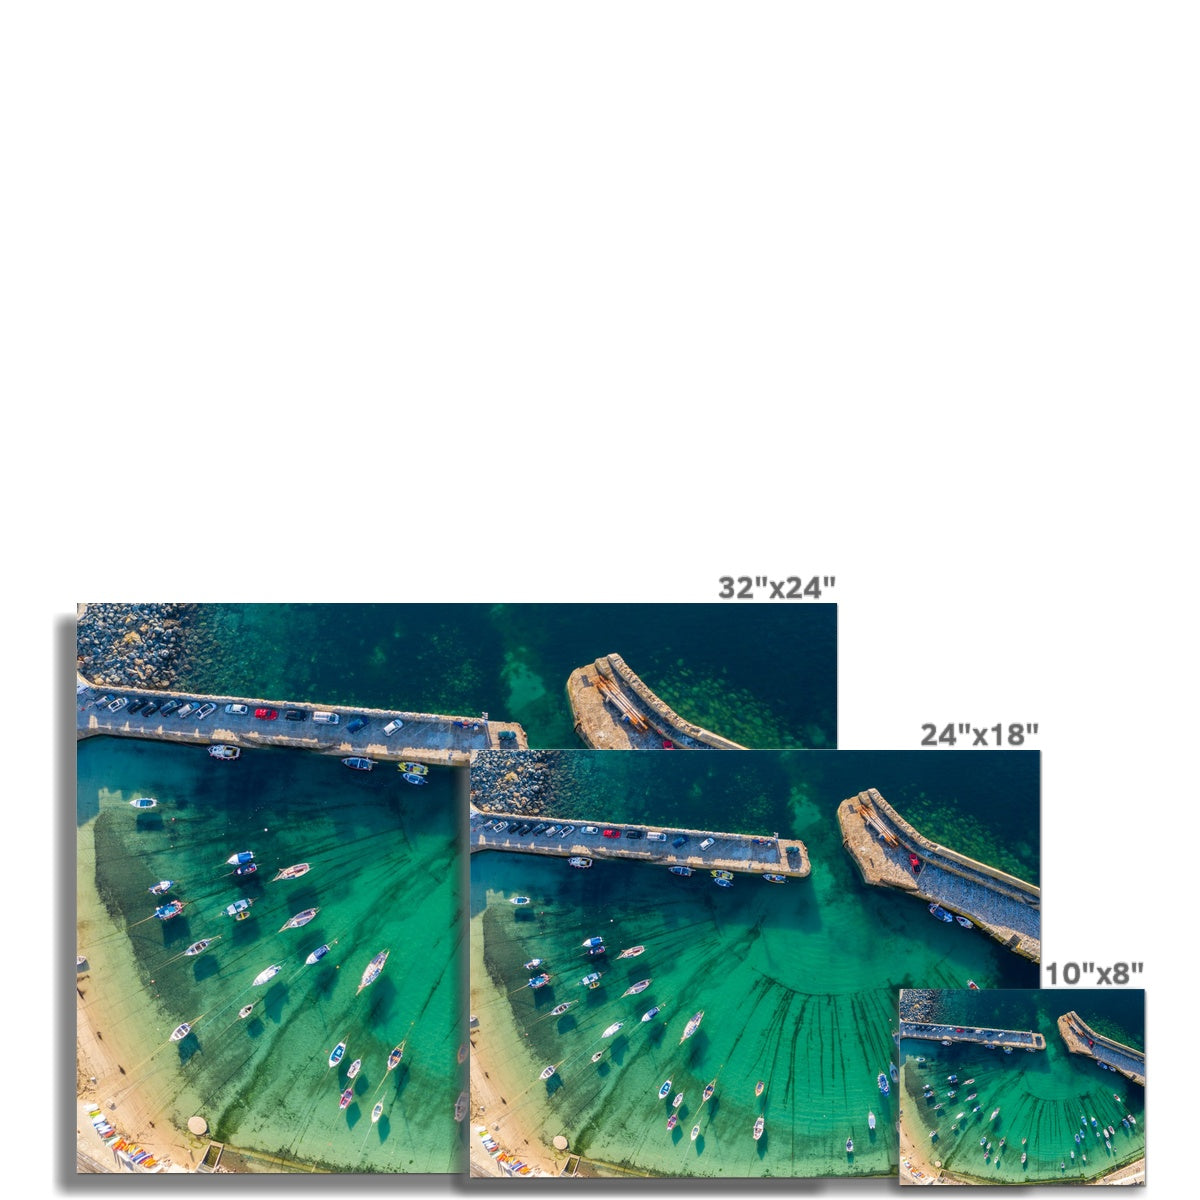 mousehole harbour picture sizes